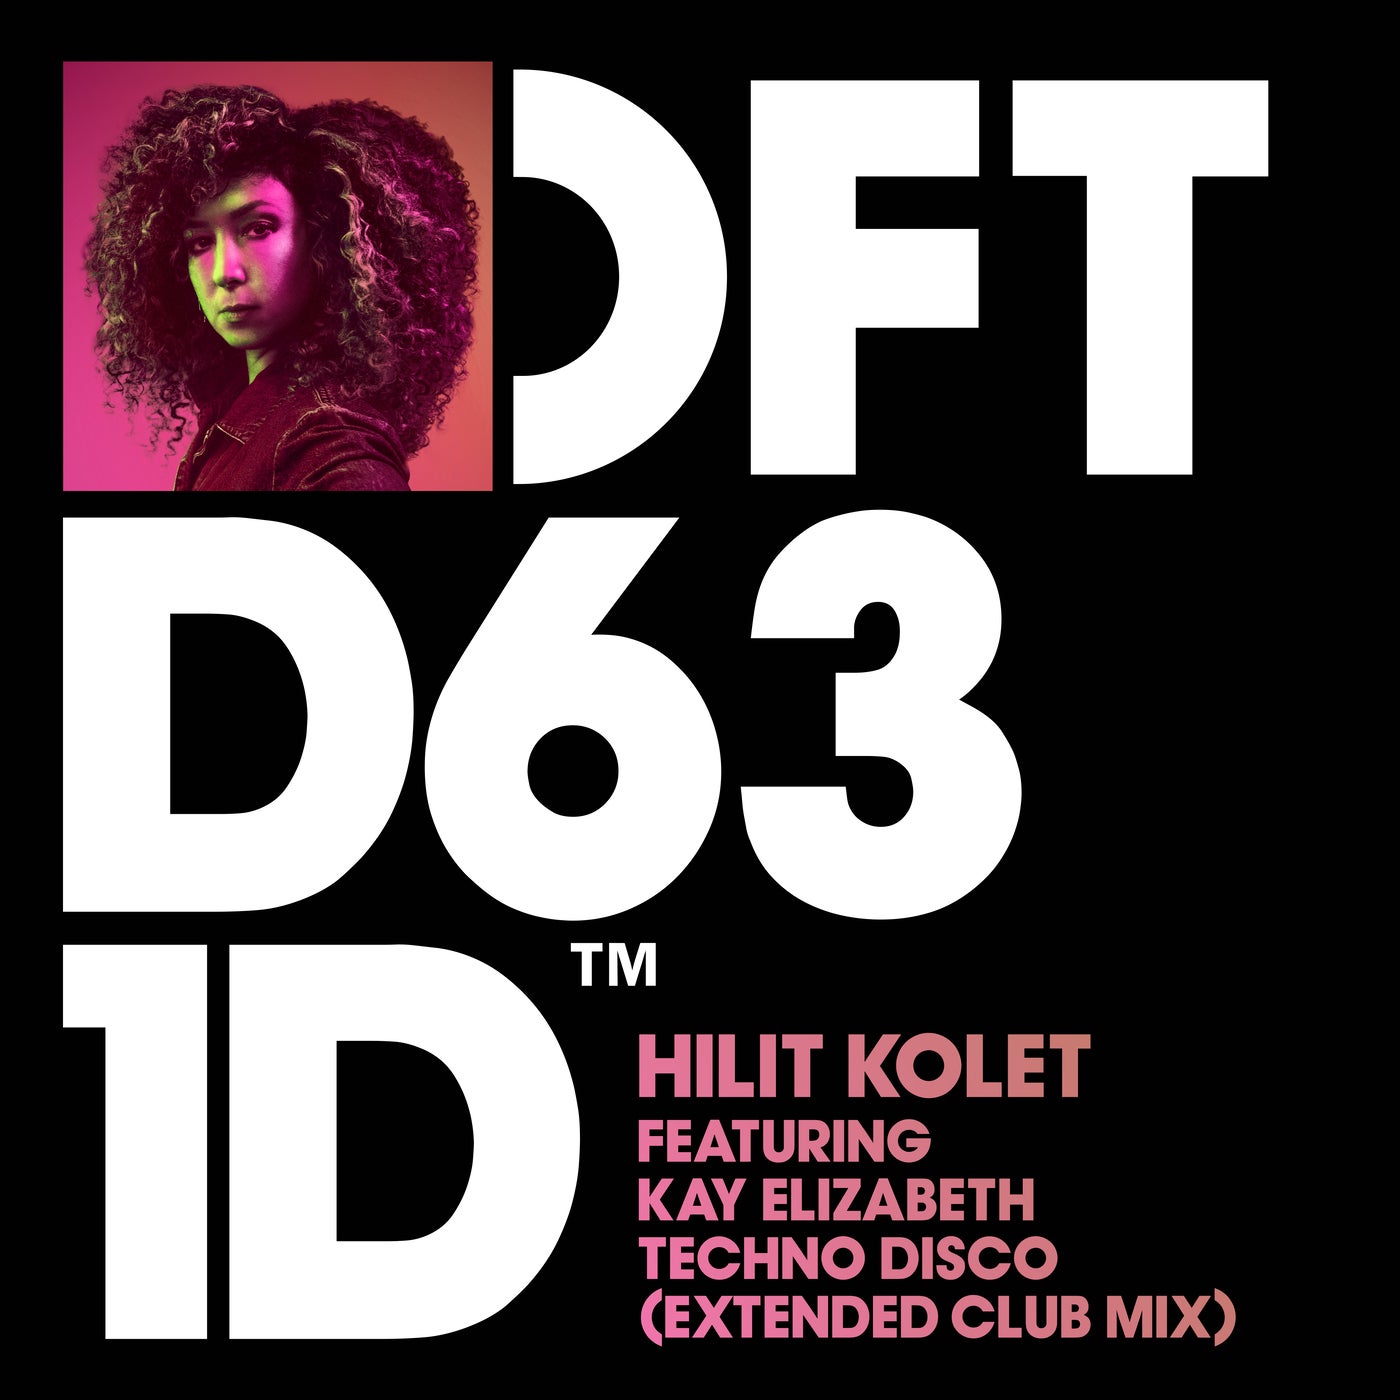 Hilit Kolet – Techno Disco – Extended Club Mix [DFTD631D4]